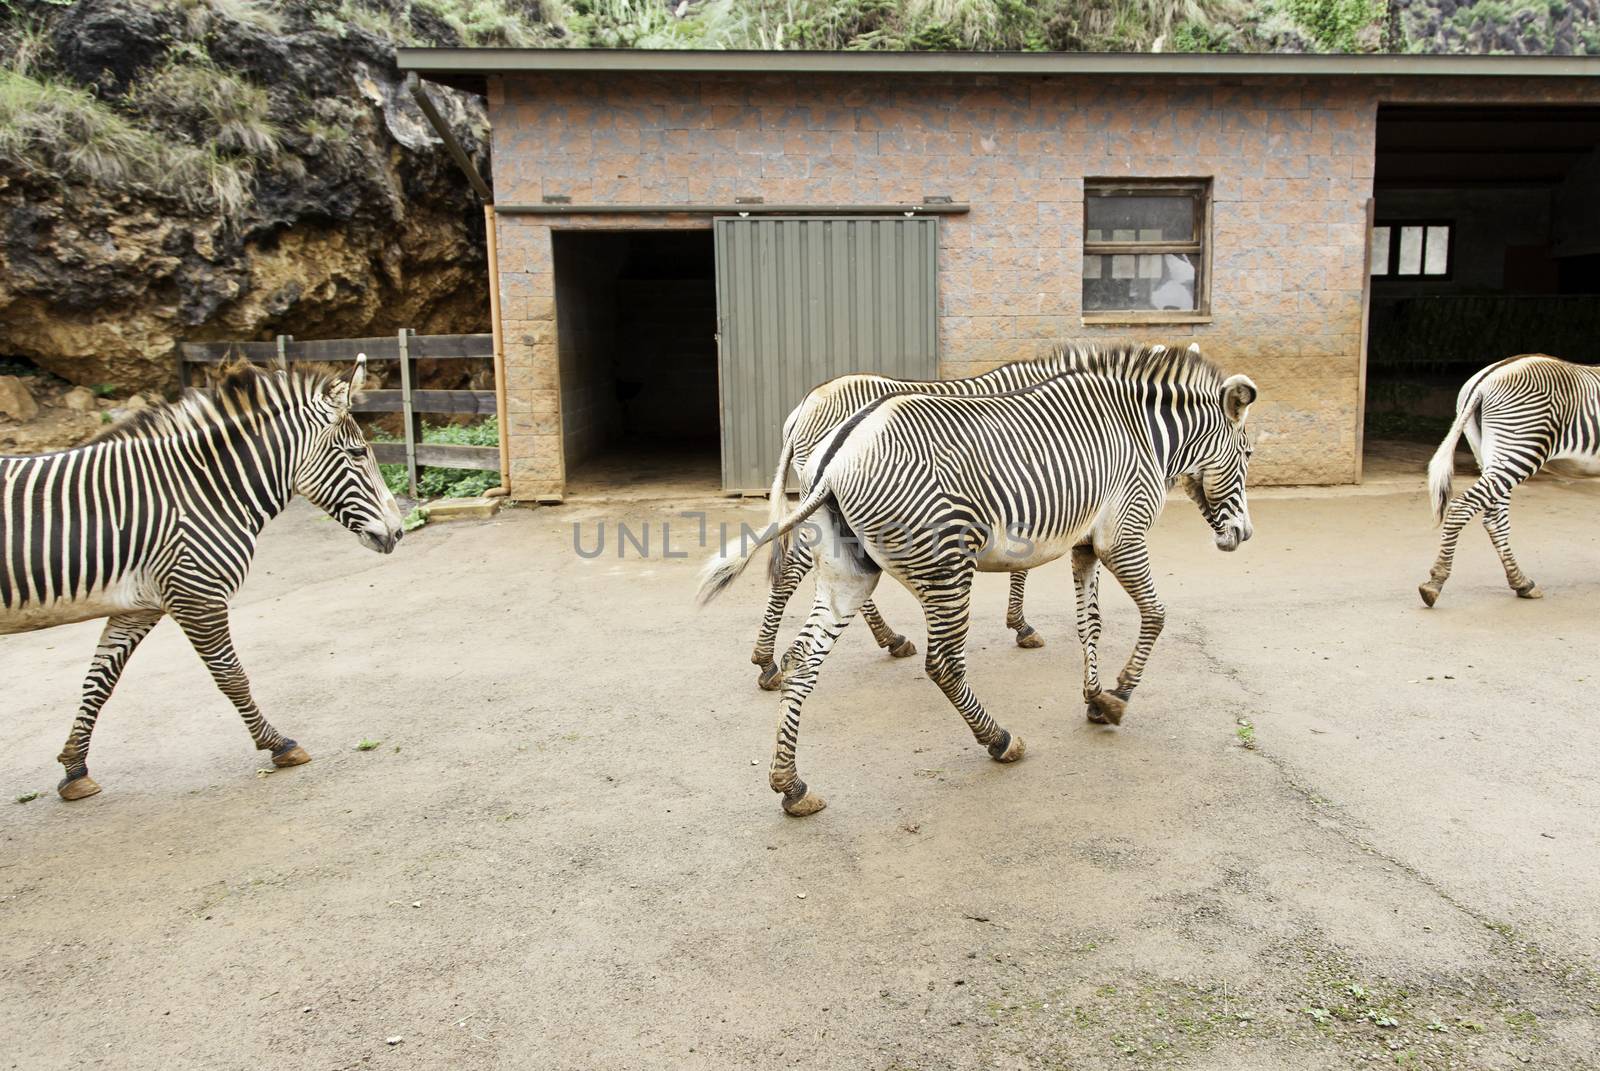 Wild zebras in the wild by esebene